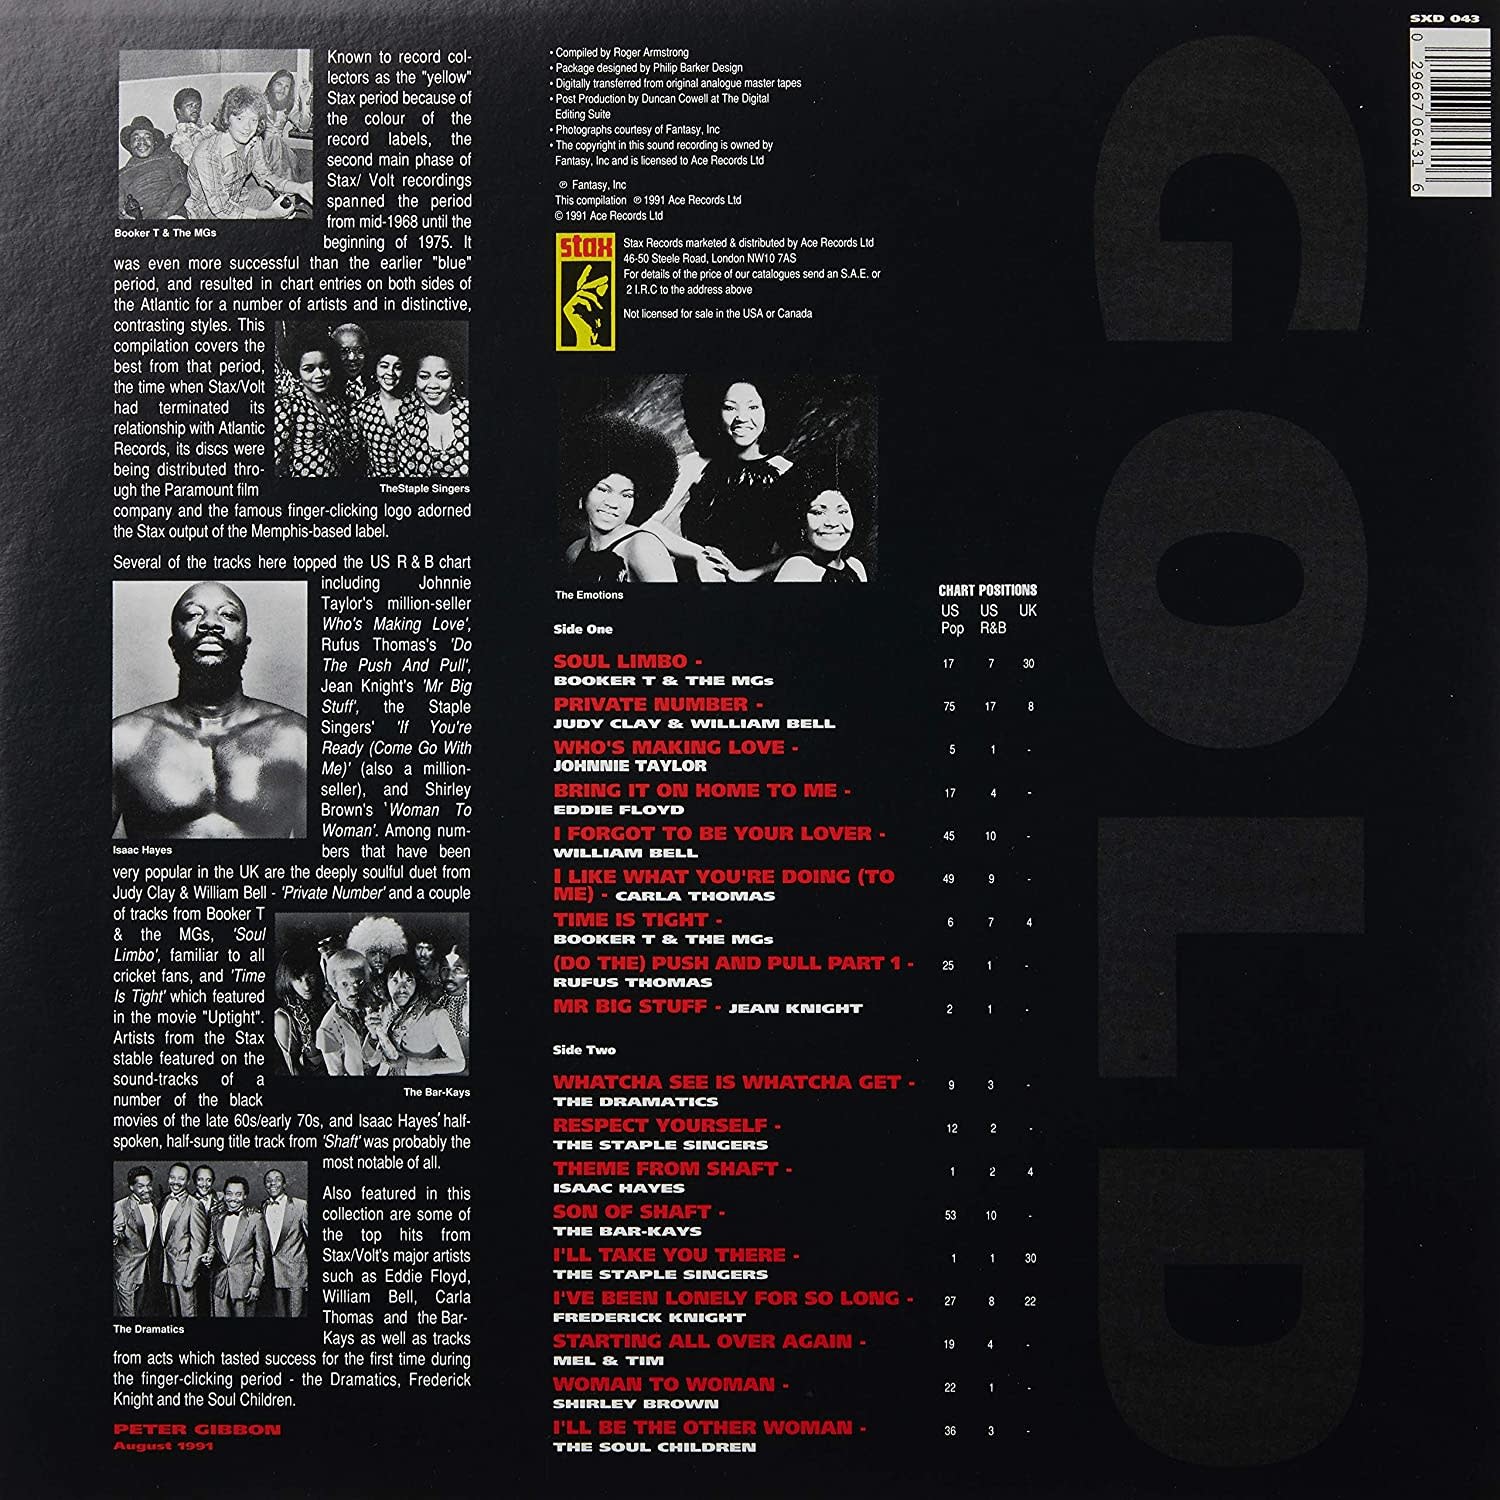 Various - Stax Gold : Hits 1968 -1974